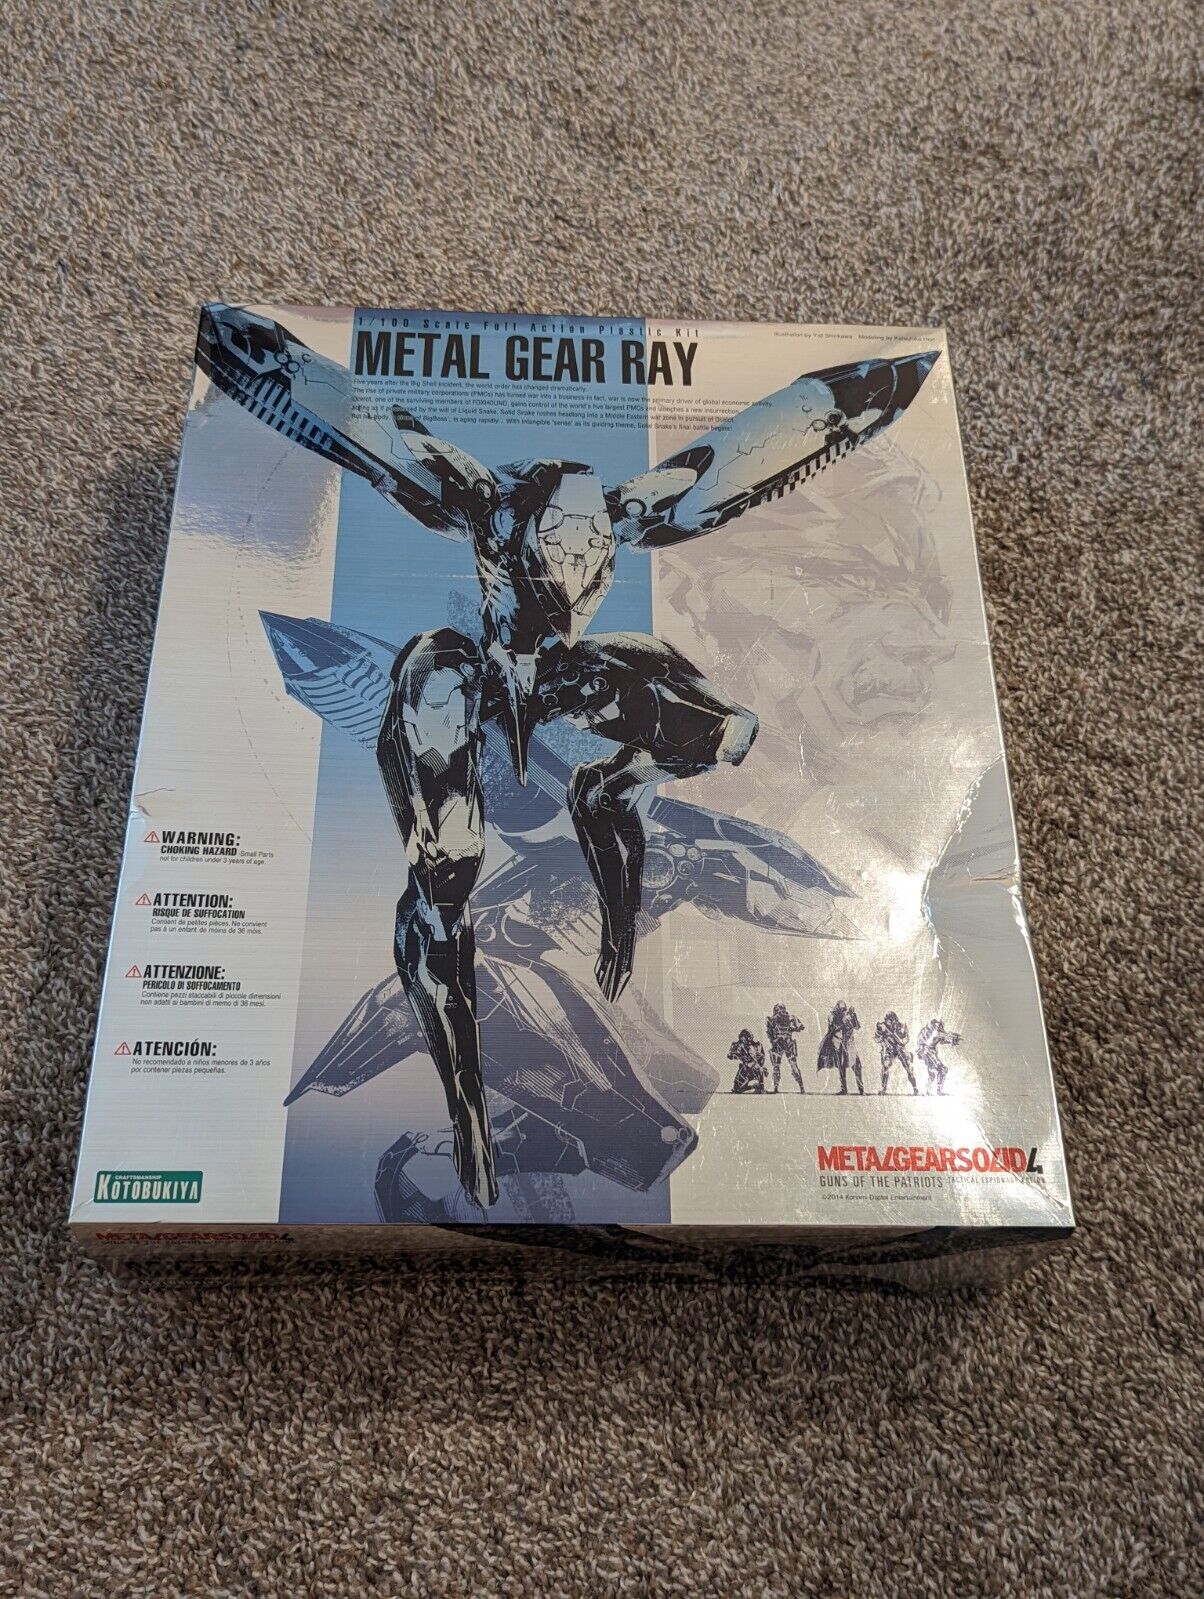 Kotobukiya Metal Gear Ray 1/100 Scale Plastic Model Toy Figure